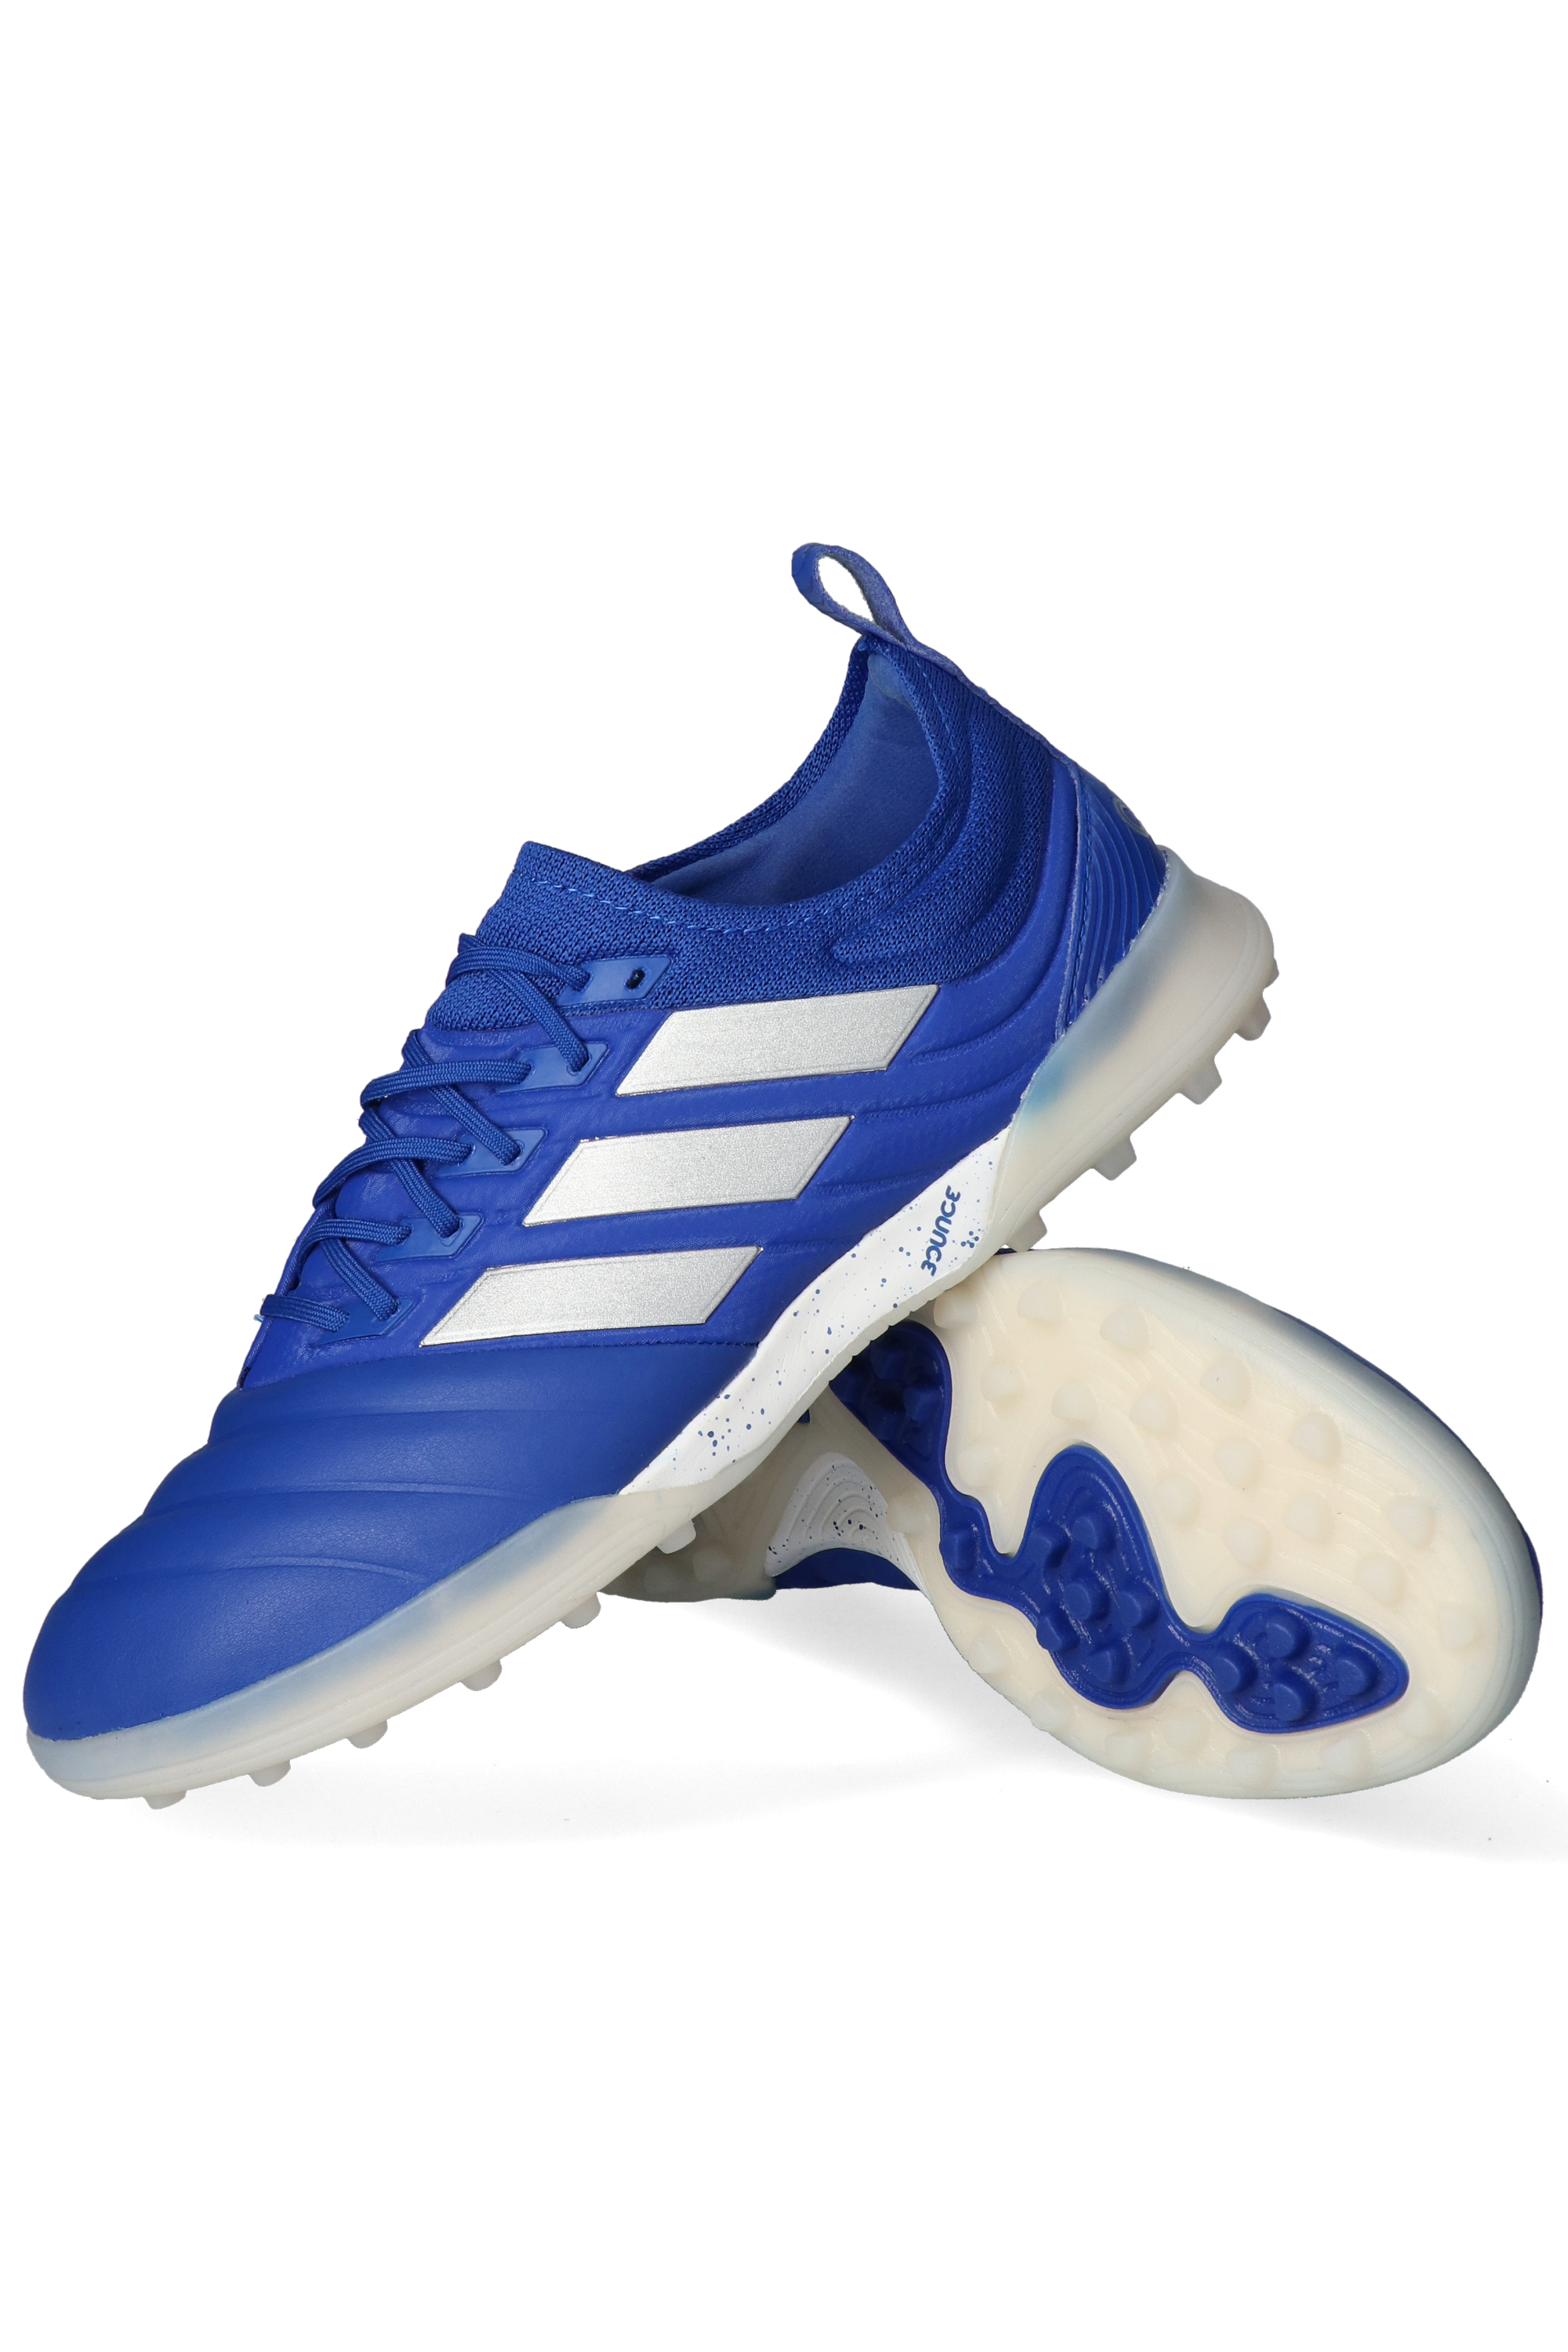 adidas Copa 20.1 TF | R-GOL.com - Football boots \u0026 equipment